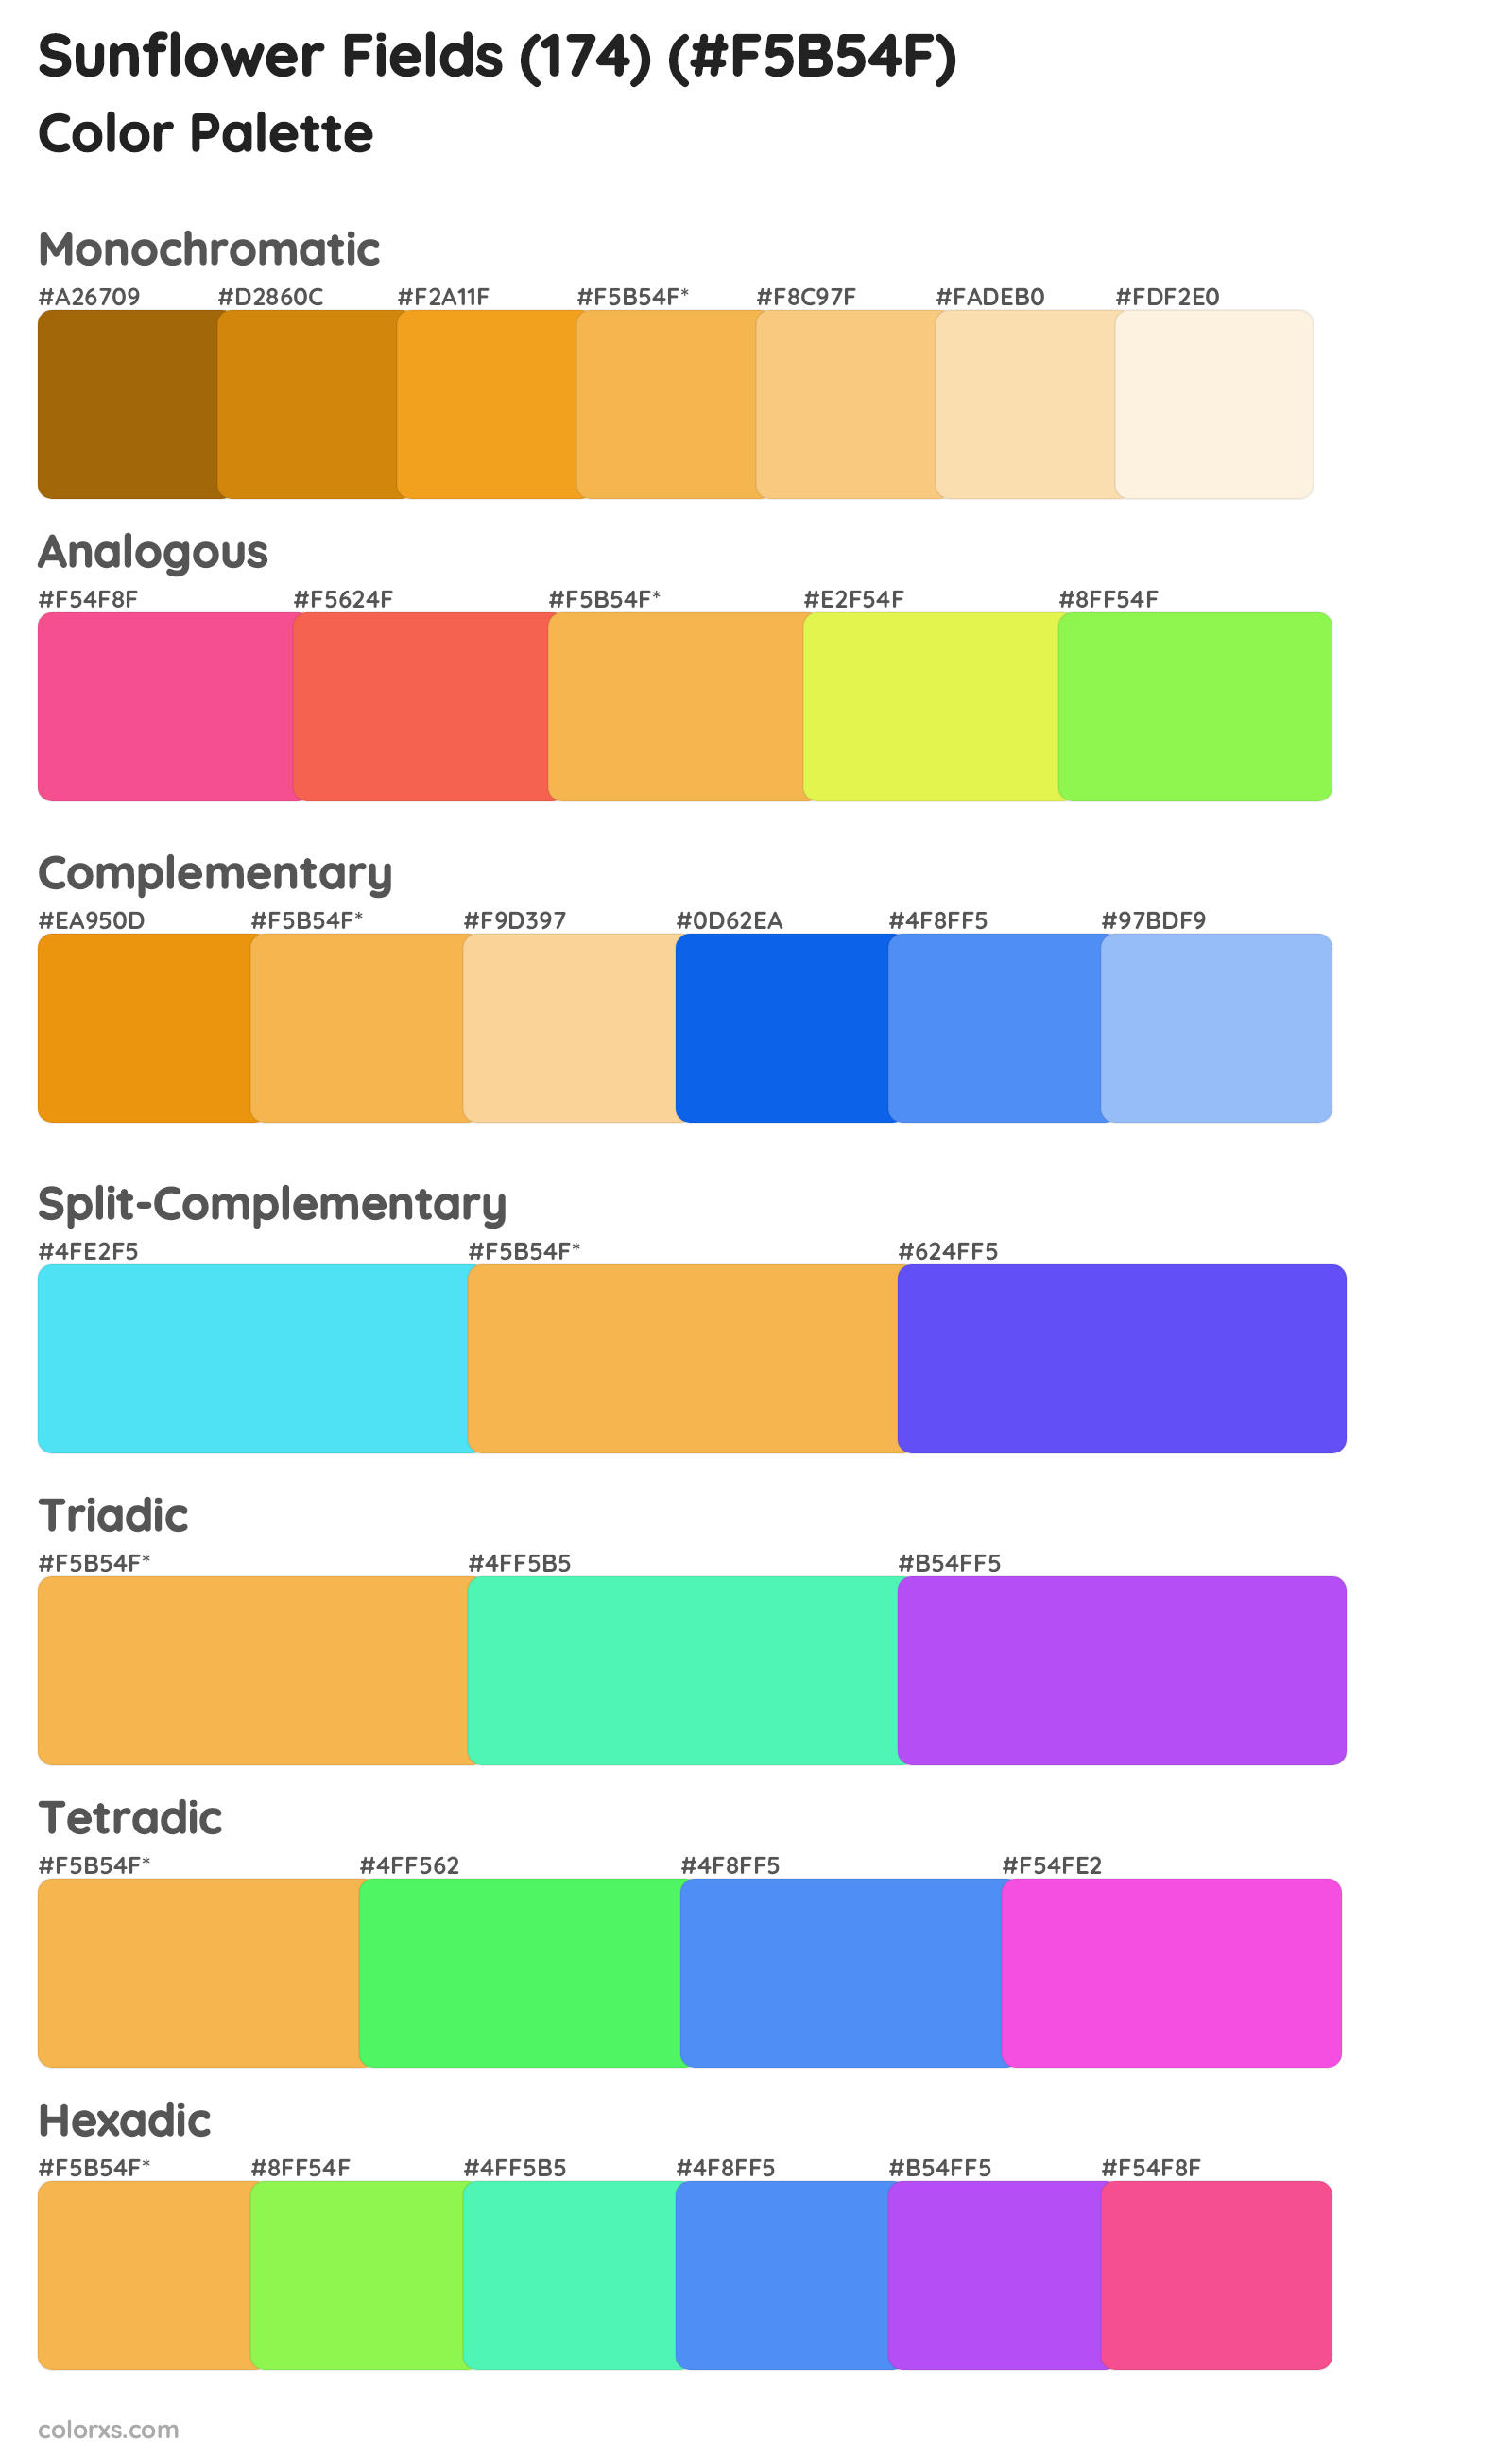 Sunflower Fields (174) Color Scheme Palettes